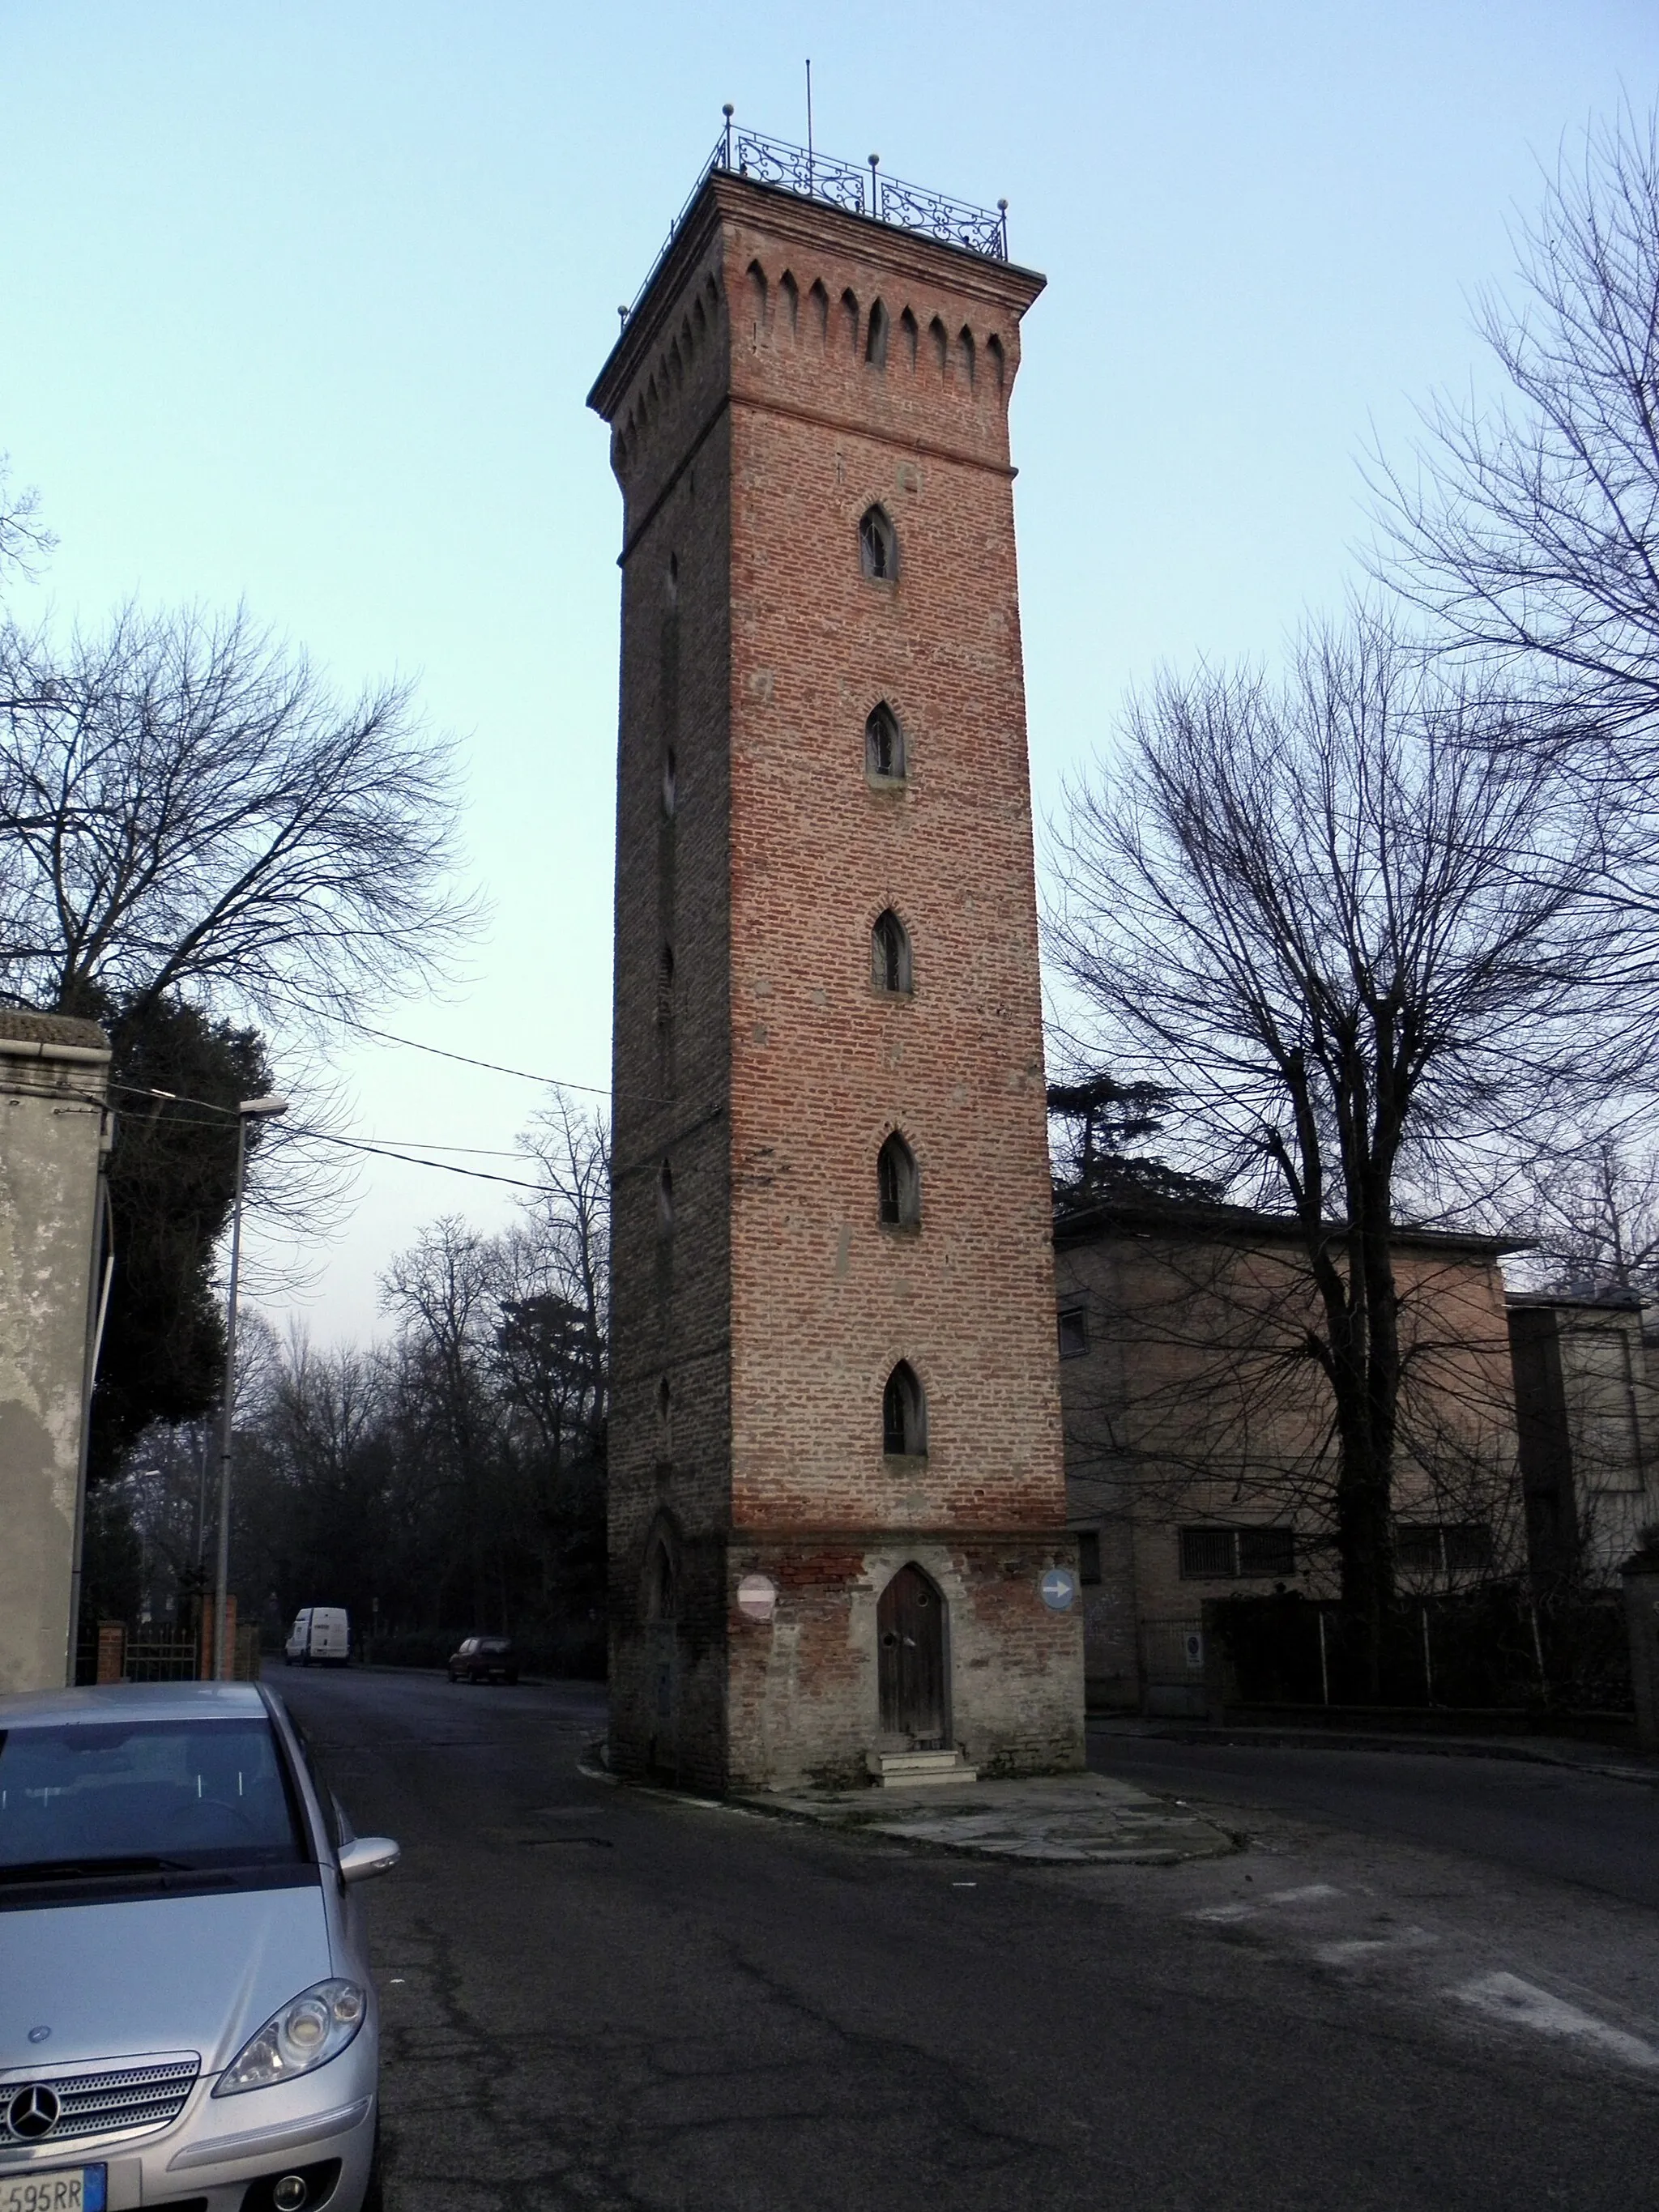 Slika Emilia-Romagna